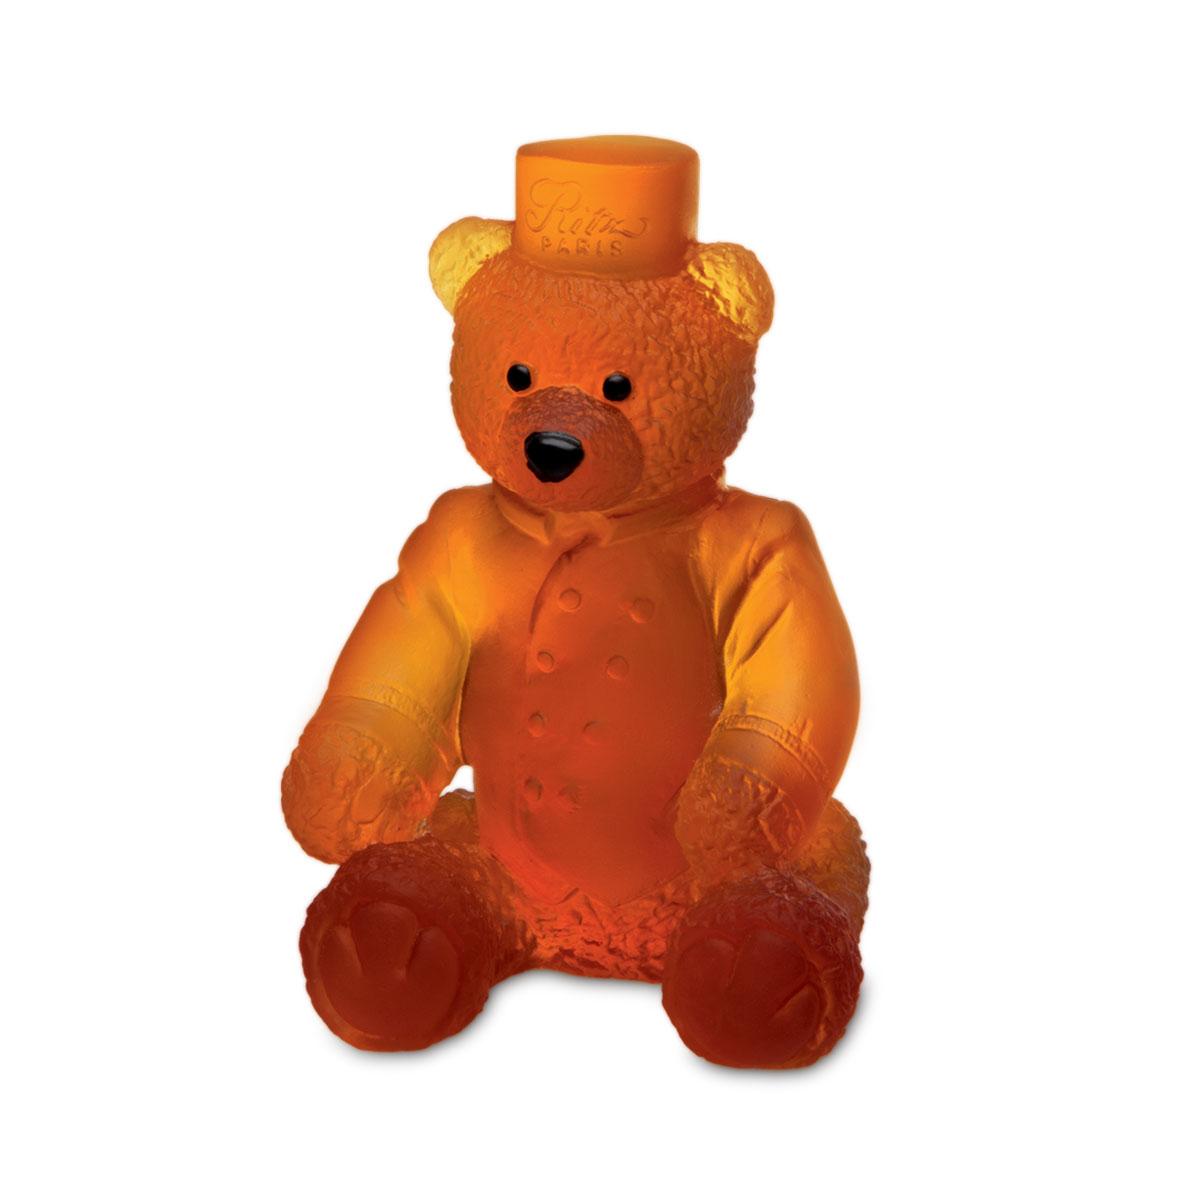 Daum Large Ritz Paris Teddy Bear in Amber Sculpture